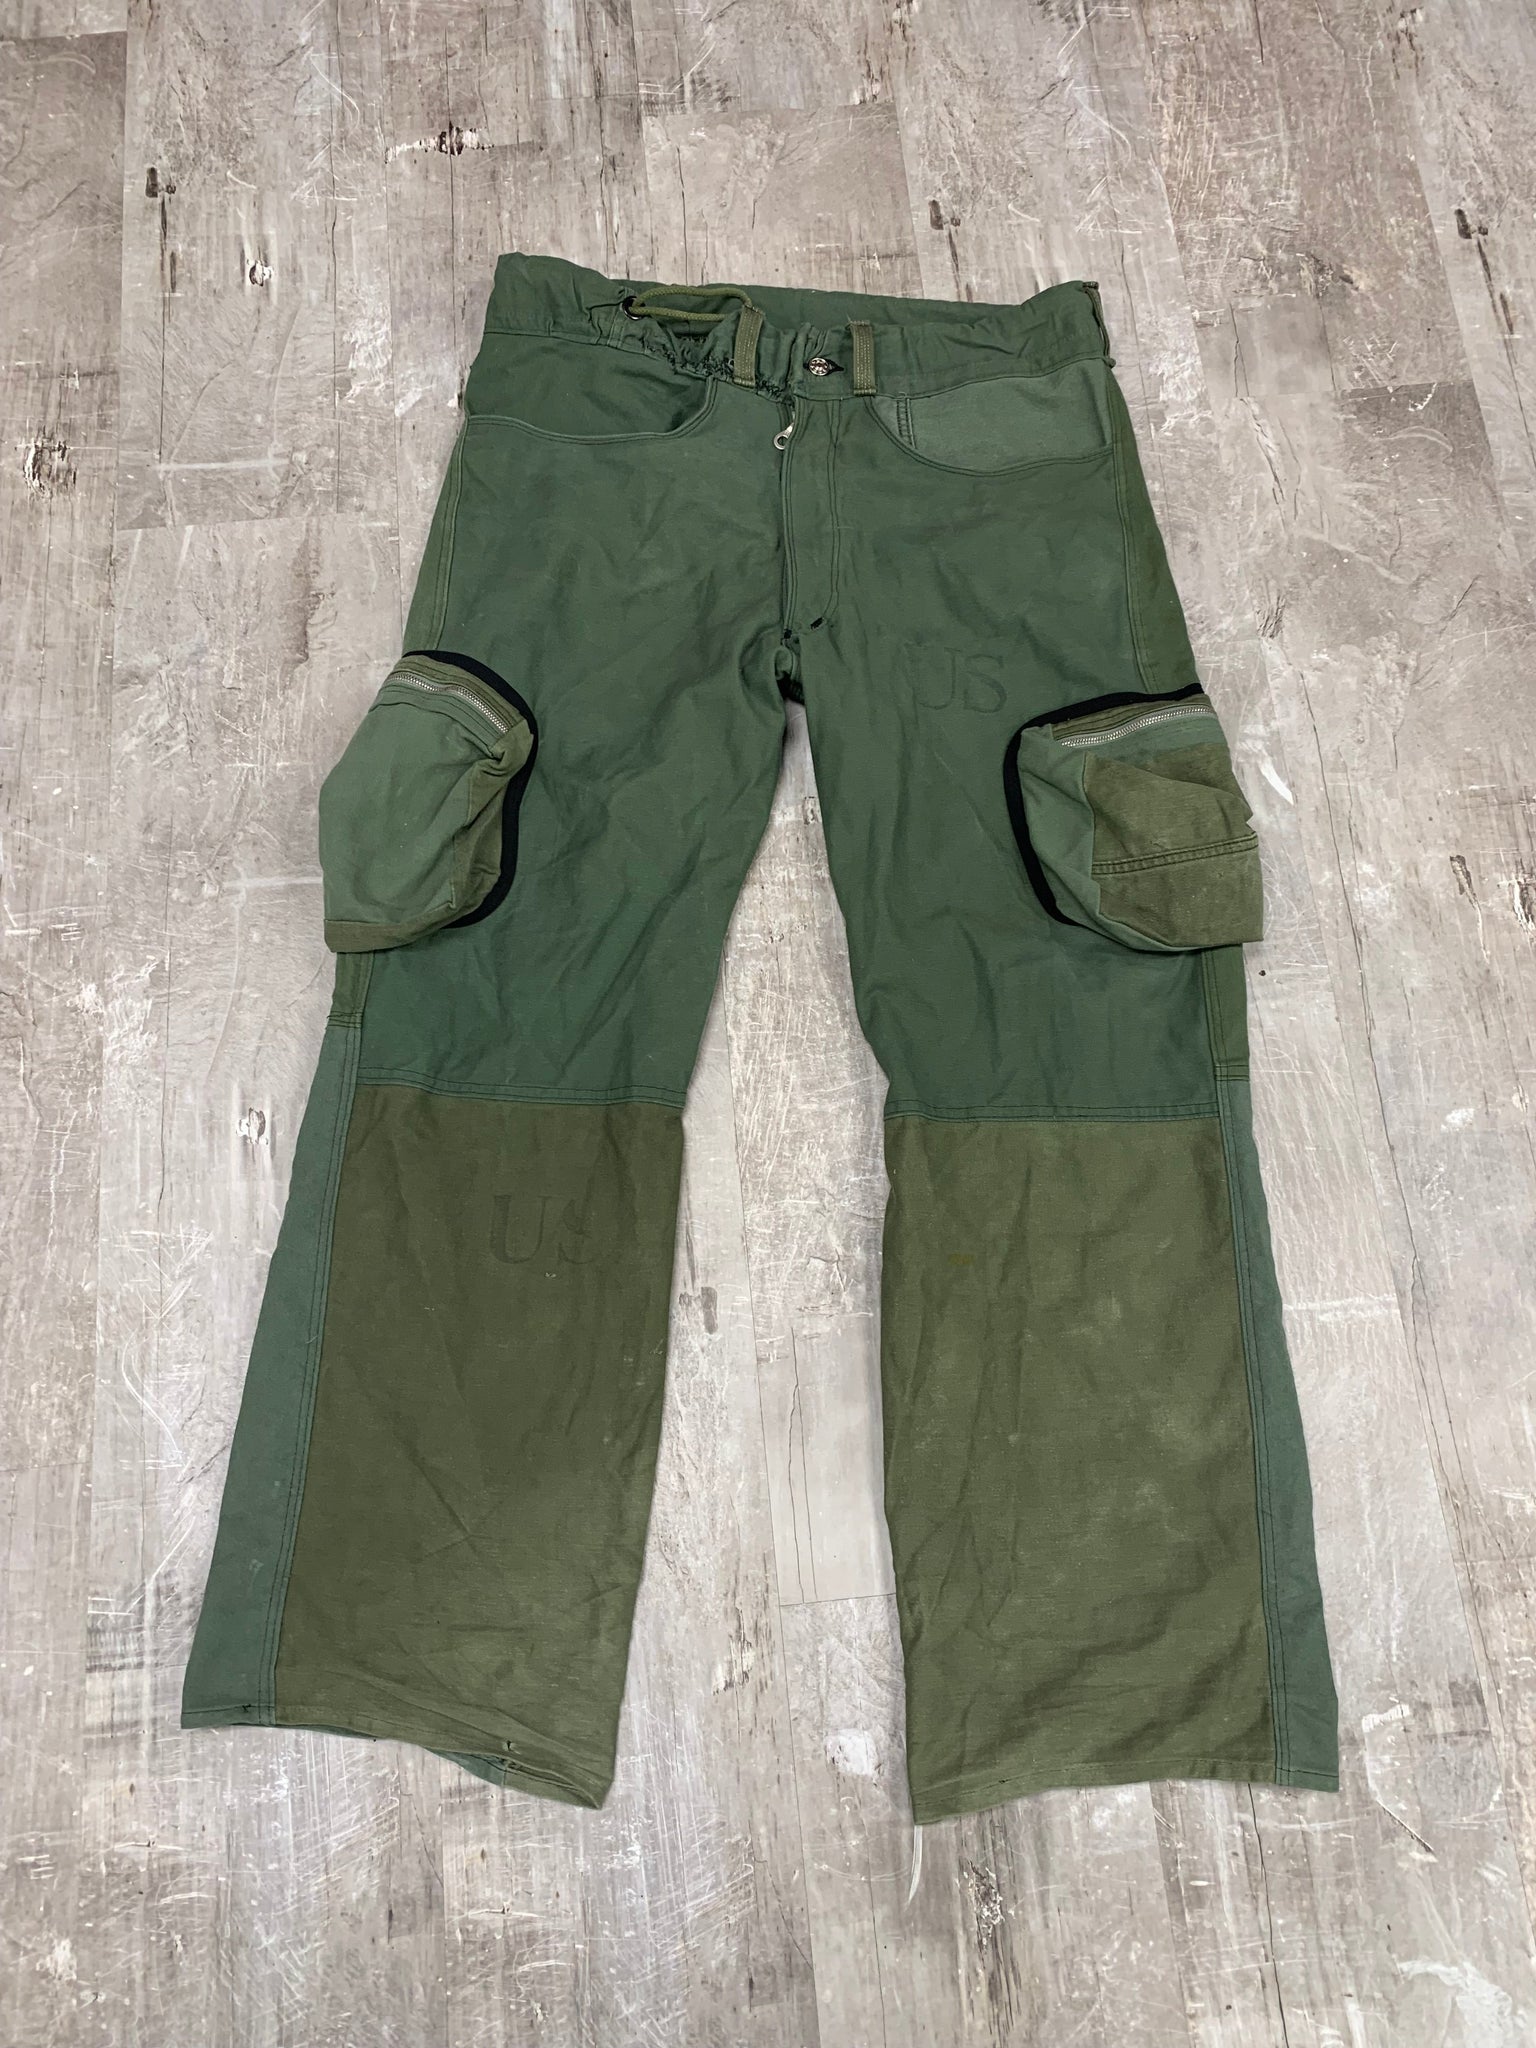 Army Bag Cargo Pants - 38x34